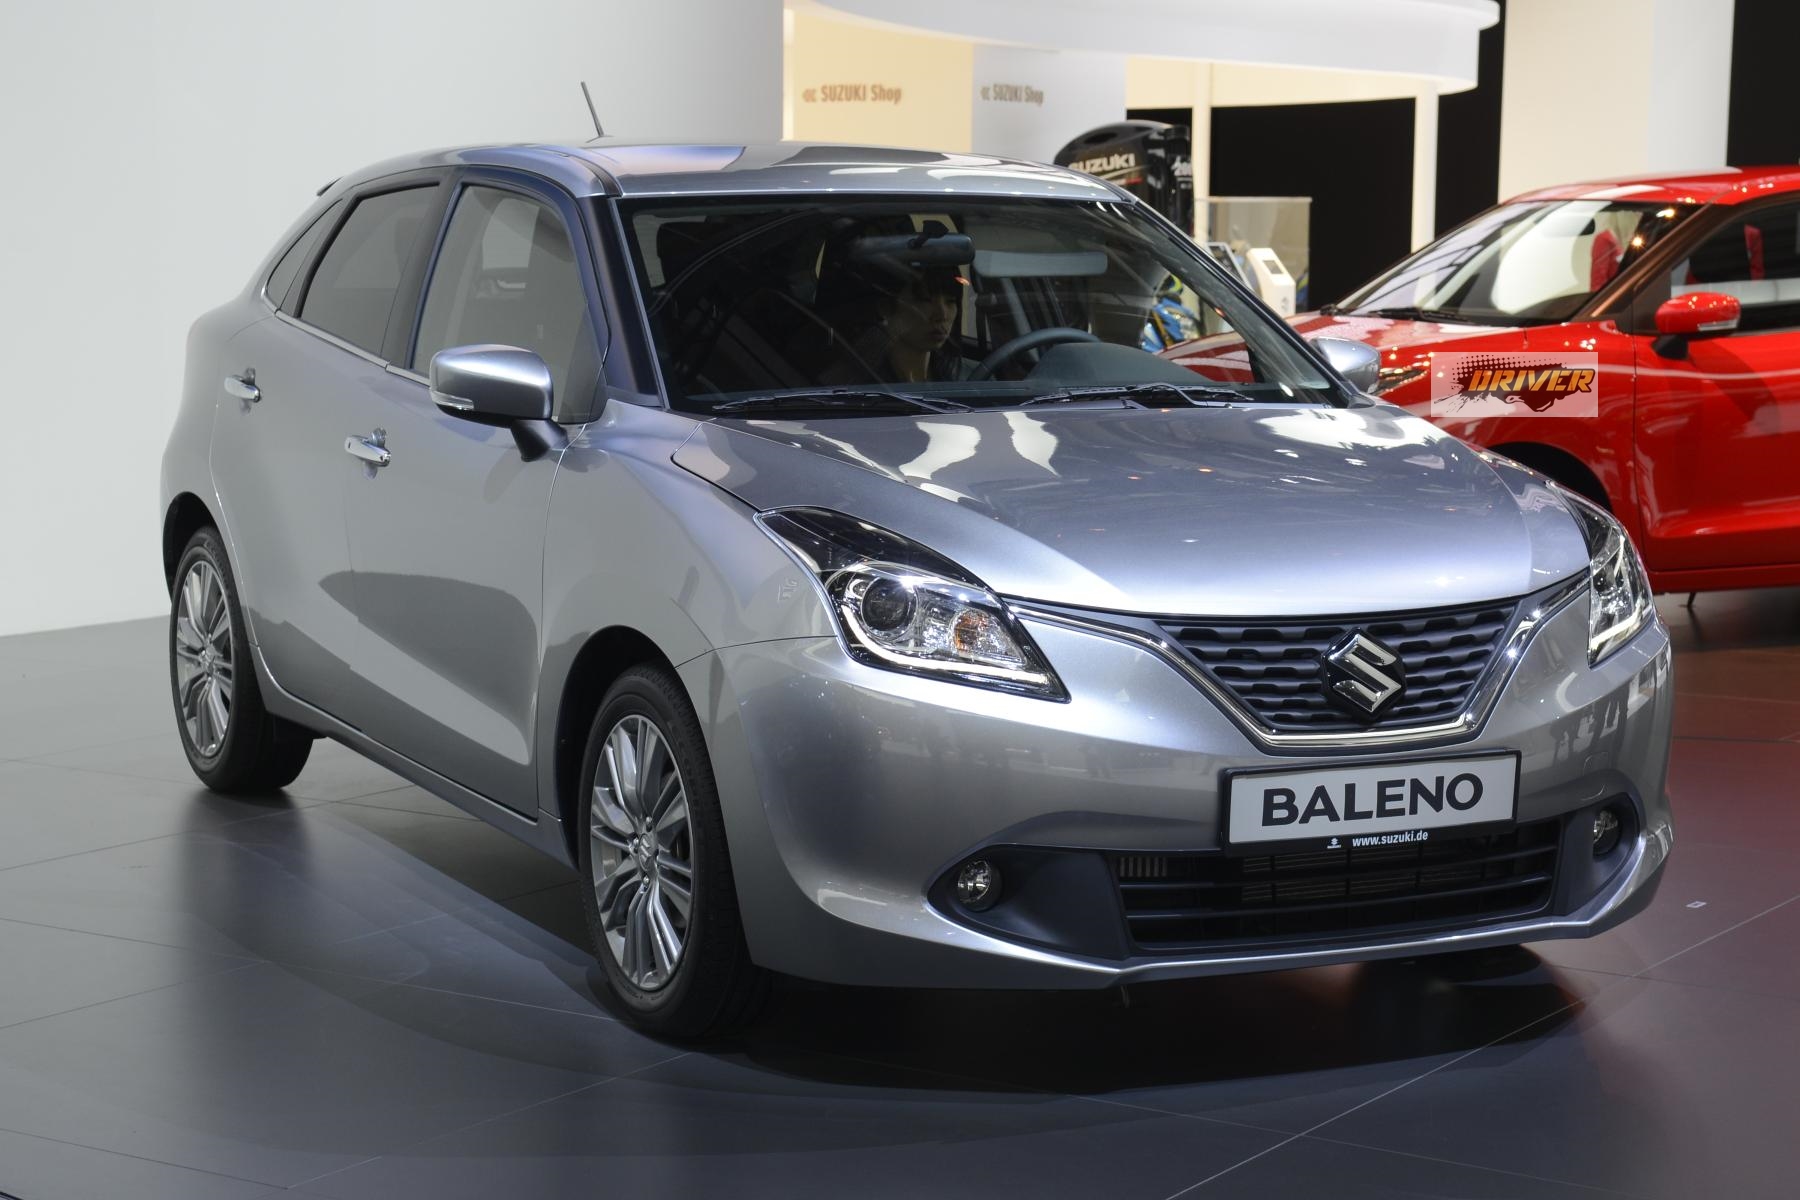 Suzuki Baleno 2018 Price in Pakistan Specs Features